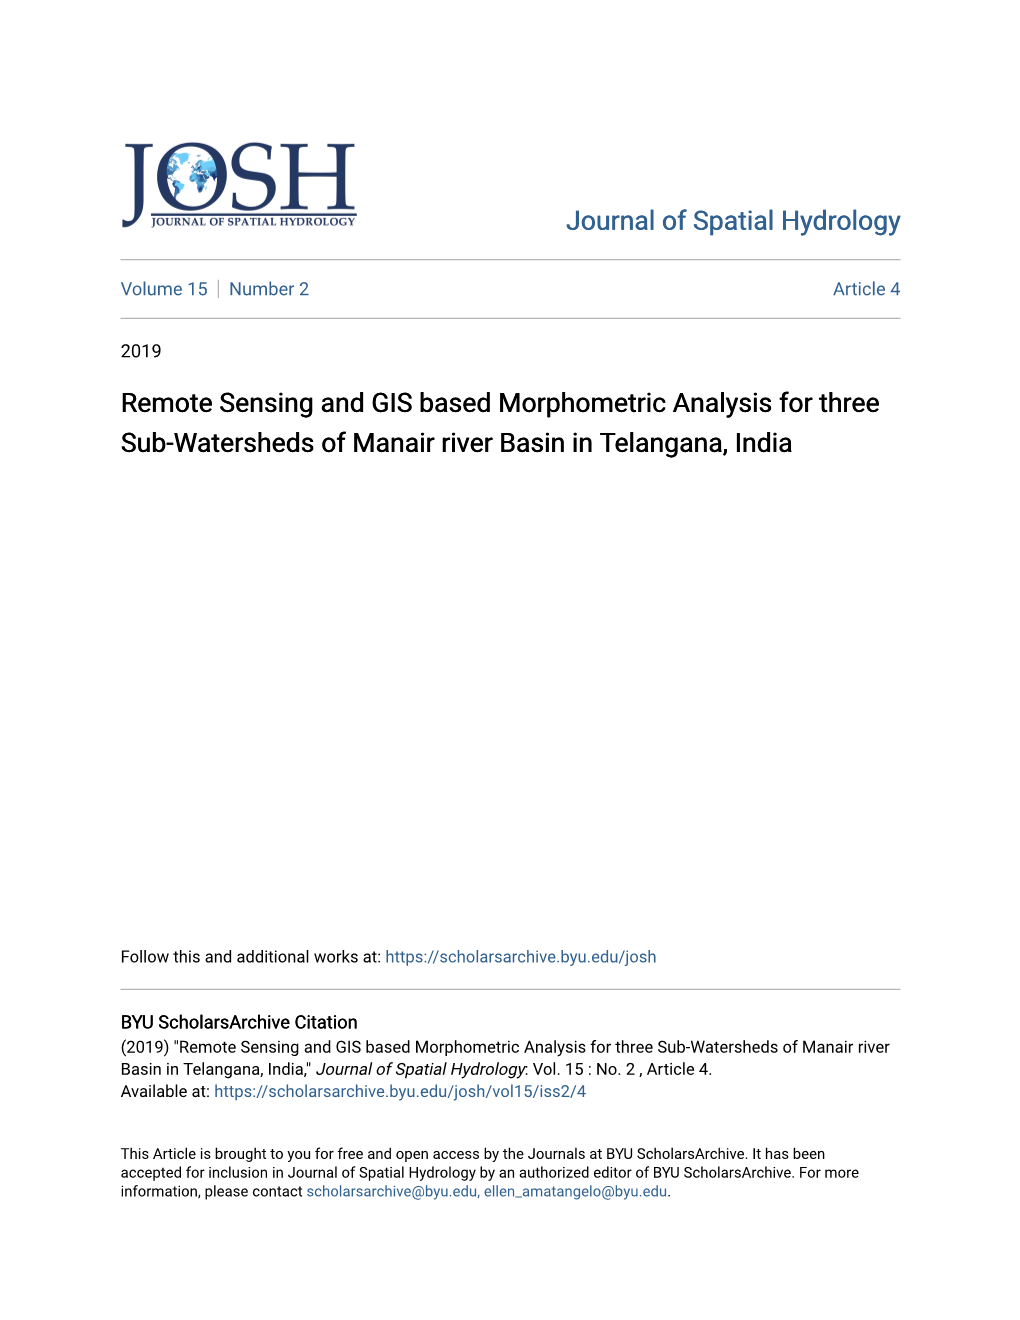 Remote Sensing and GIS Based Morphometric Analysis for Three Sub-Watersheds of Manair River Basin in Telangana, India